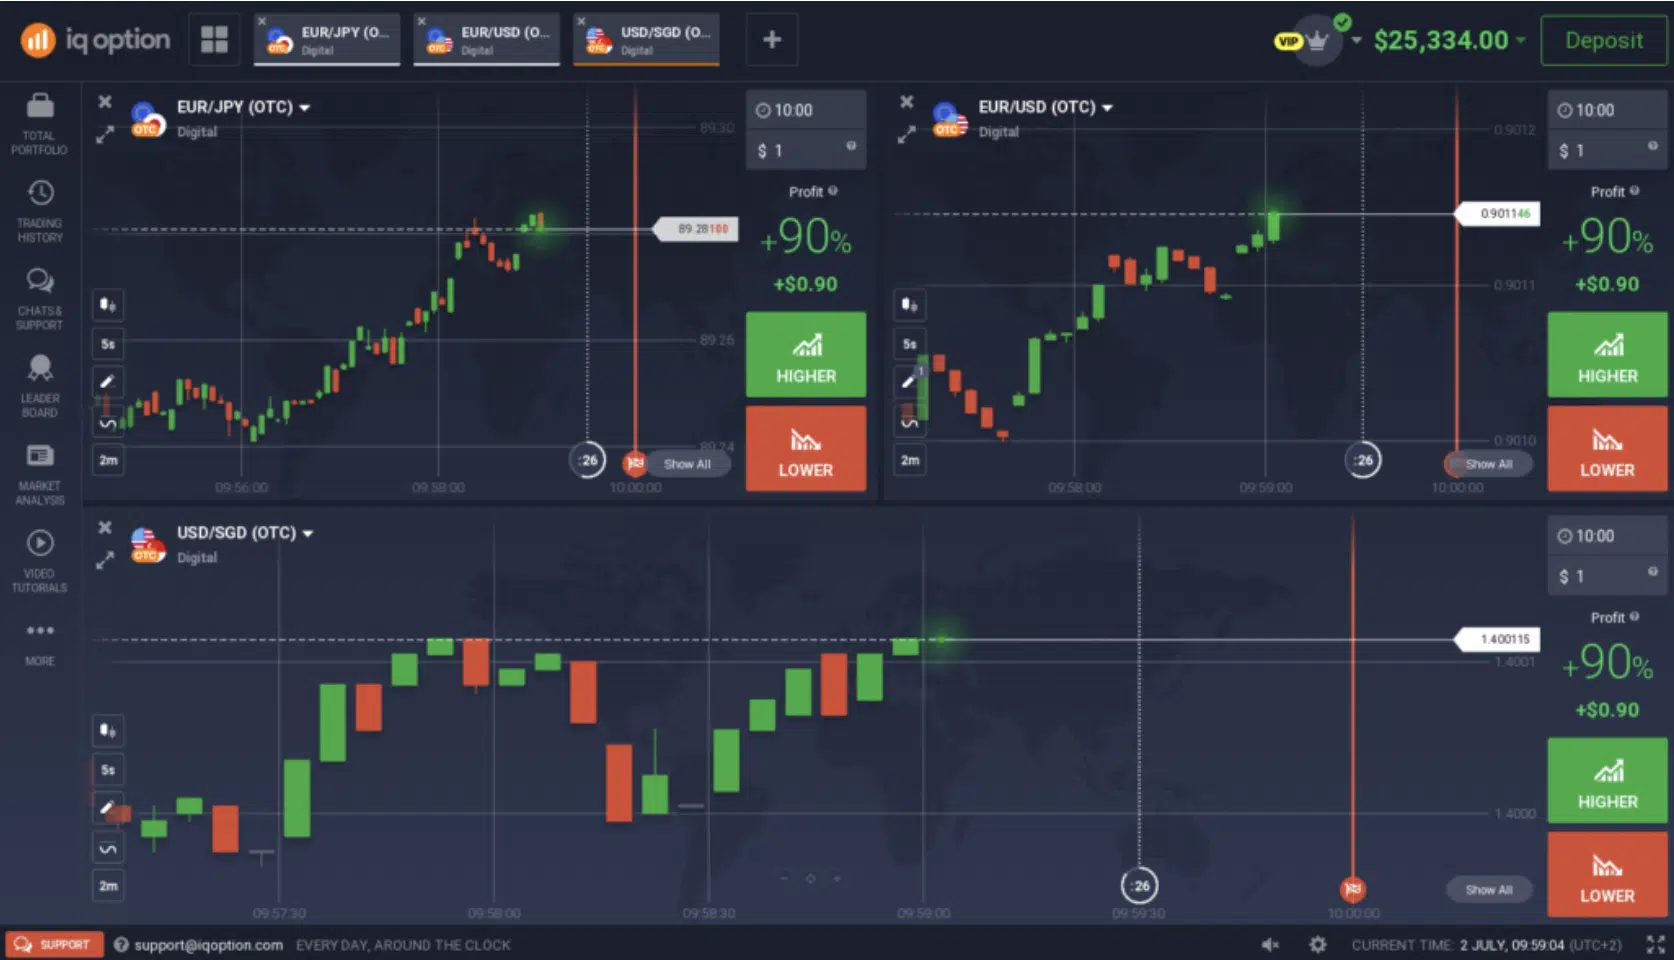  trading signals